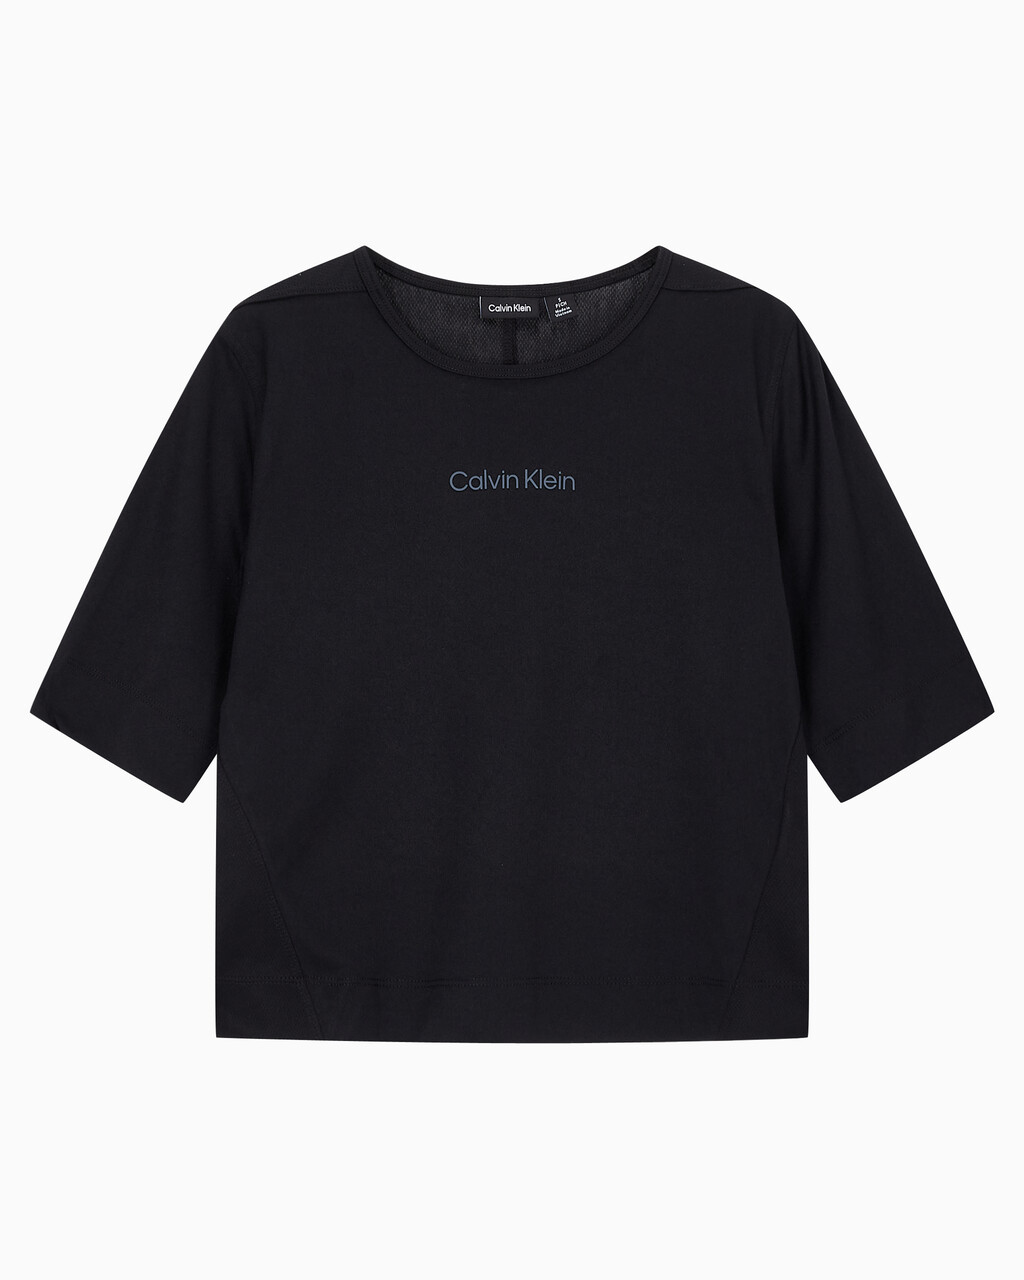 Buy 여성 박시 핏 에센셜 기능성 반팔 티셔츠 in color BLACK